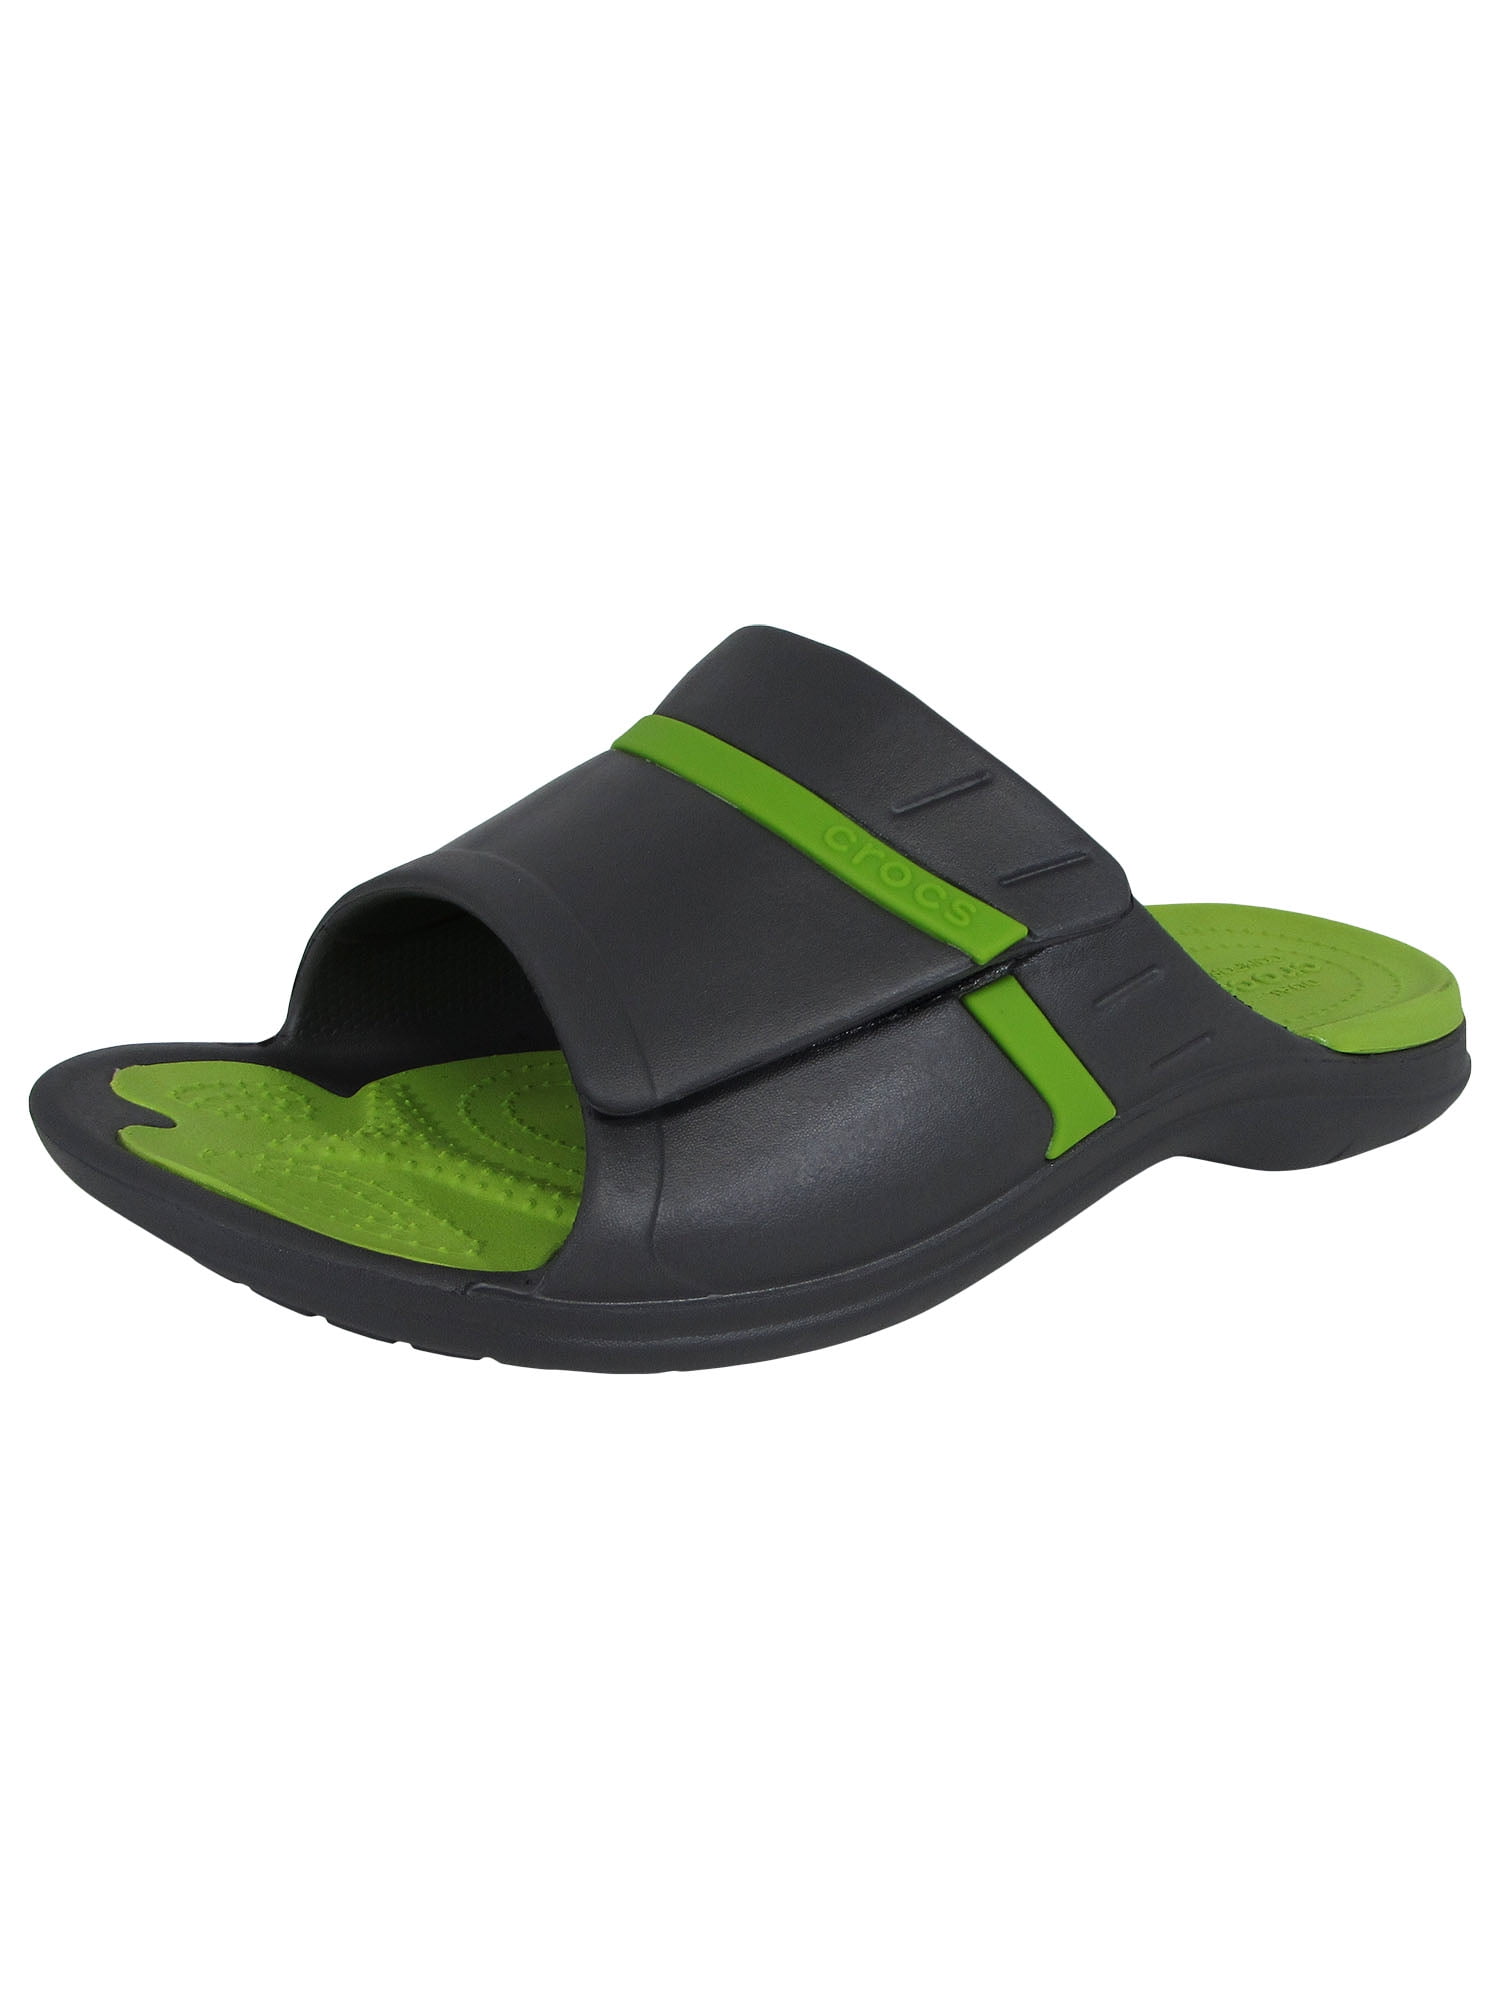 Crocs Unisex Adults’ Modi Sport Slide Sandals